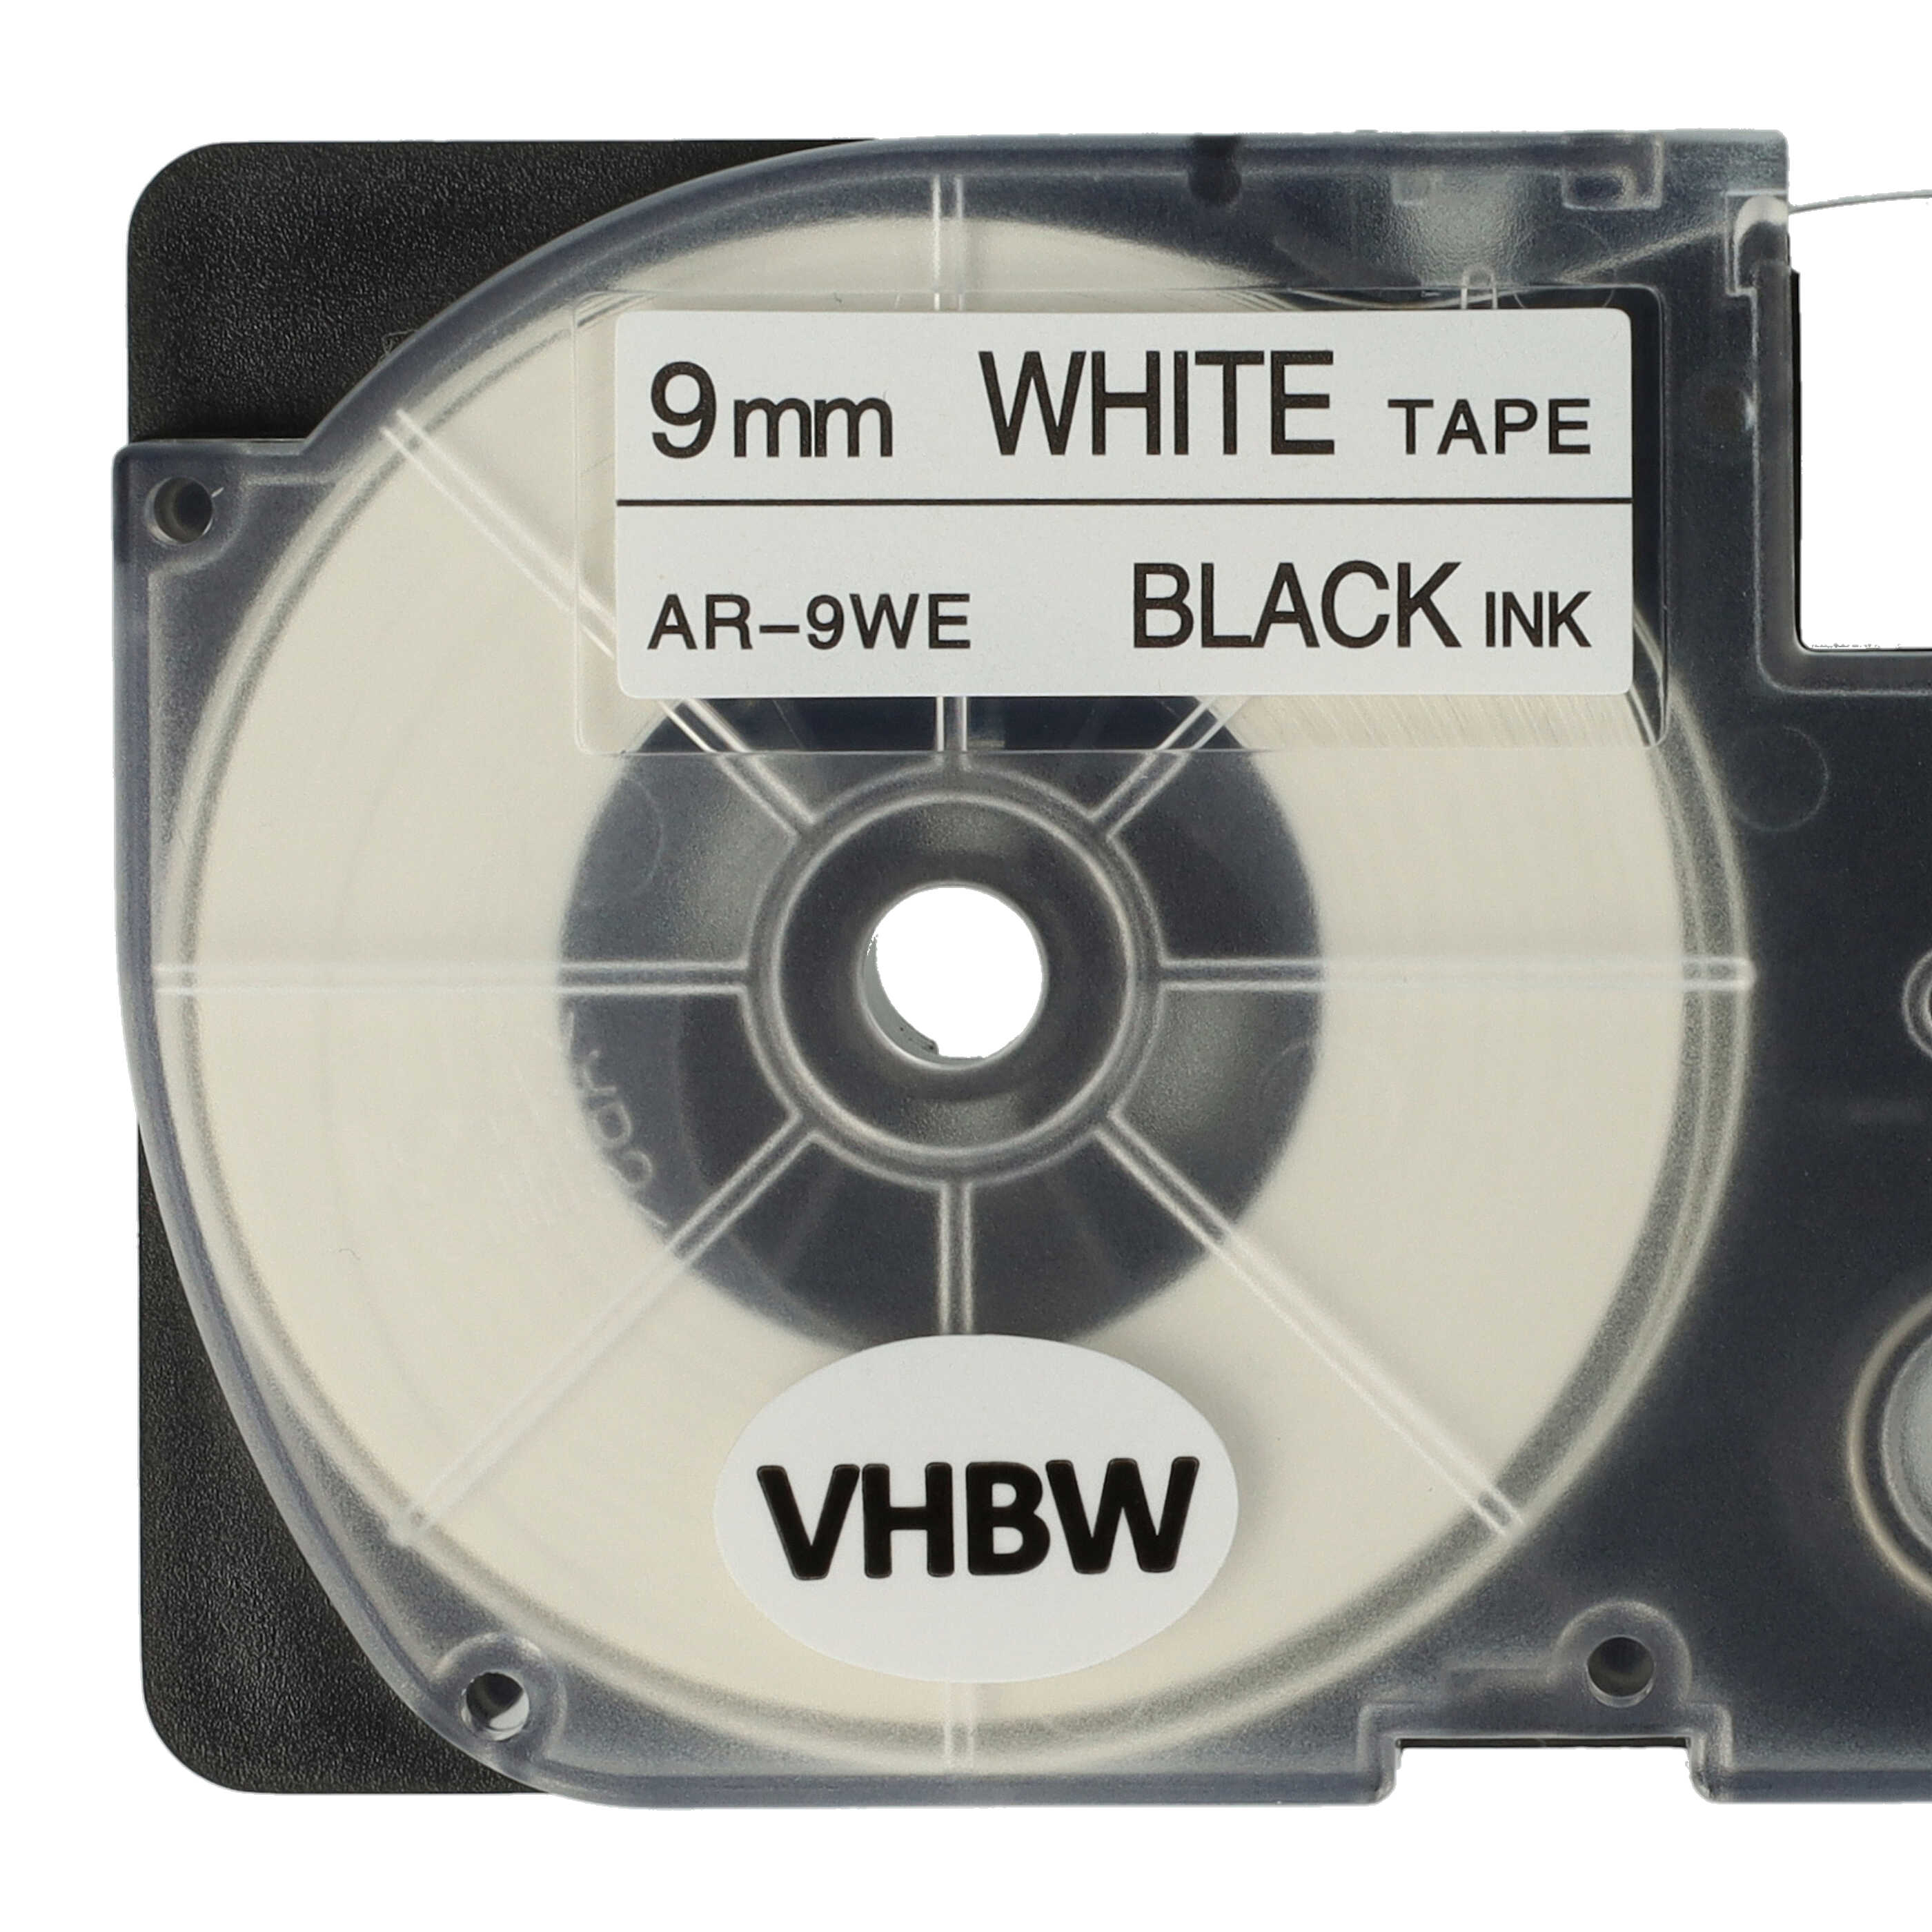 3x Casete cinta escritura reemplaza Casio XR-9WE1, XR-9WE Negro su Blanco